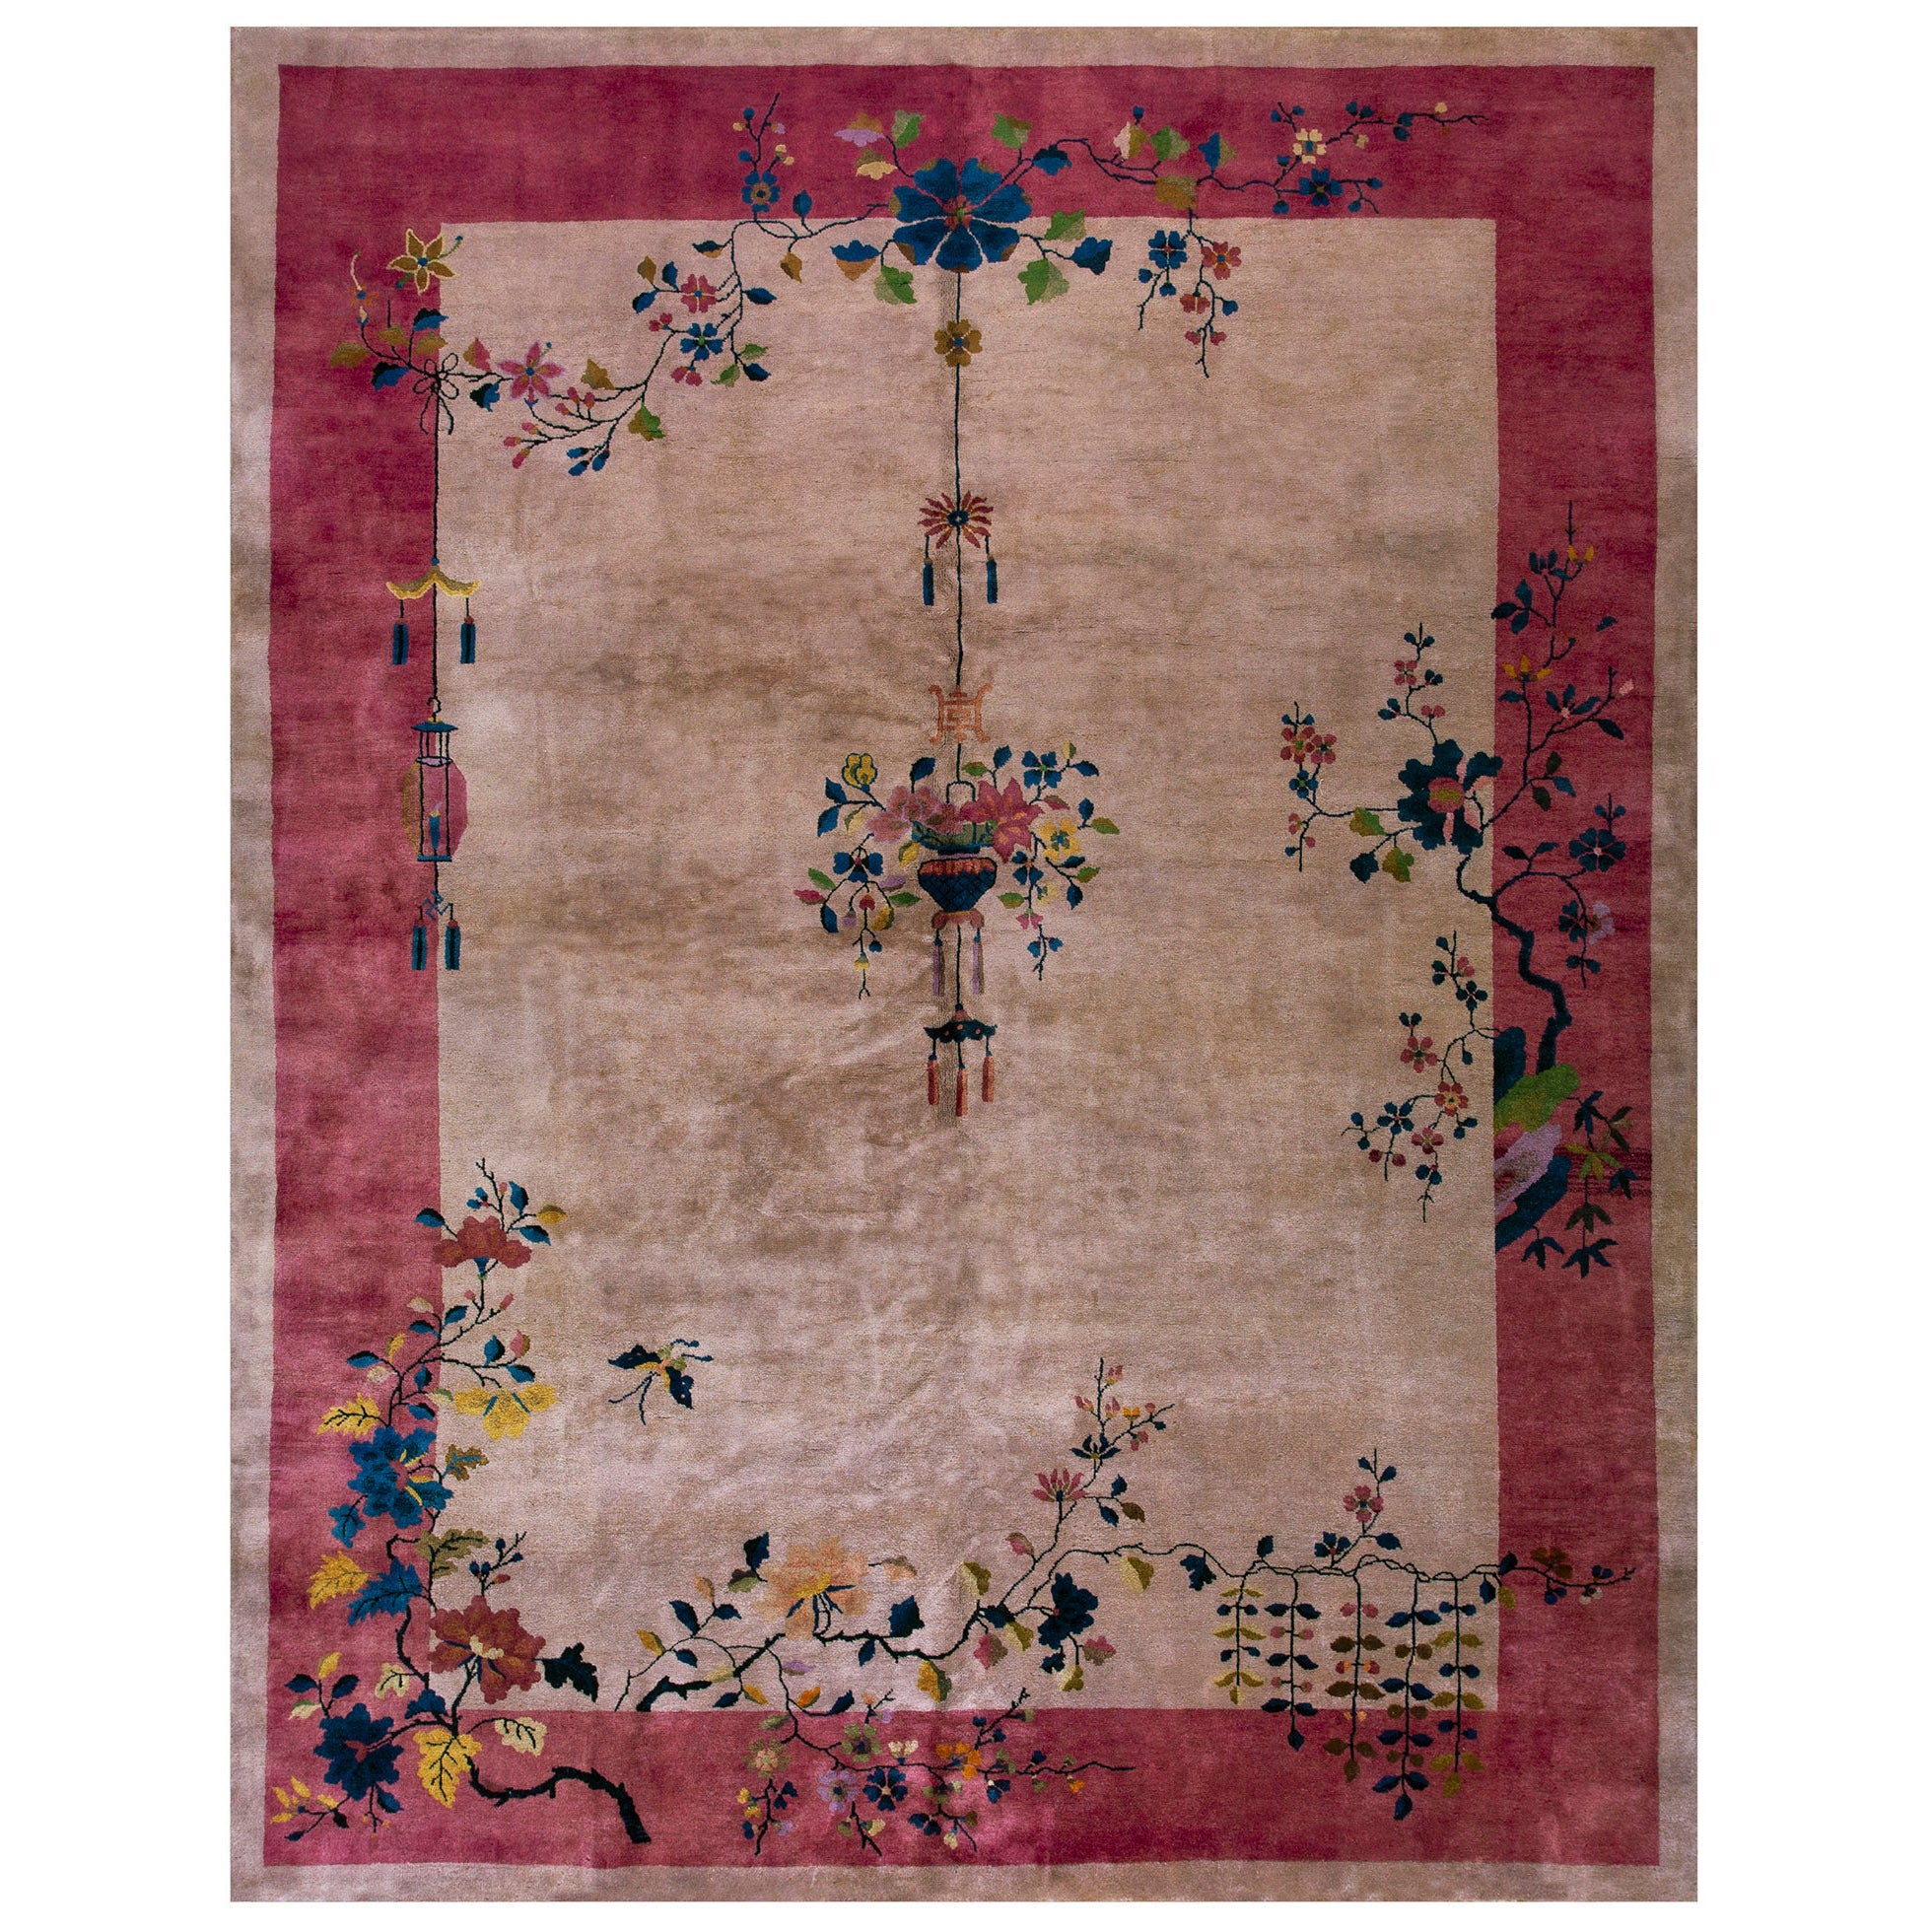 1920s Chinese Art Deco Carpet ( 8' 11'' x 11' 7" - 272 x 353 cm )